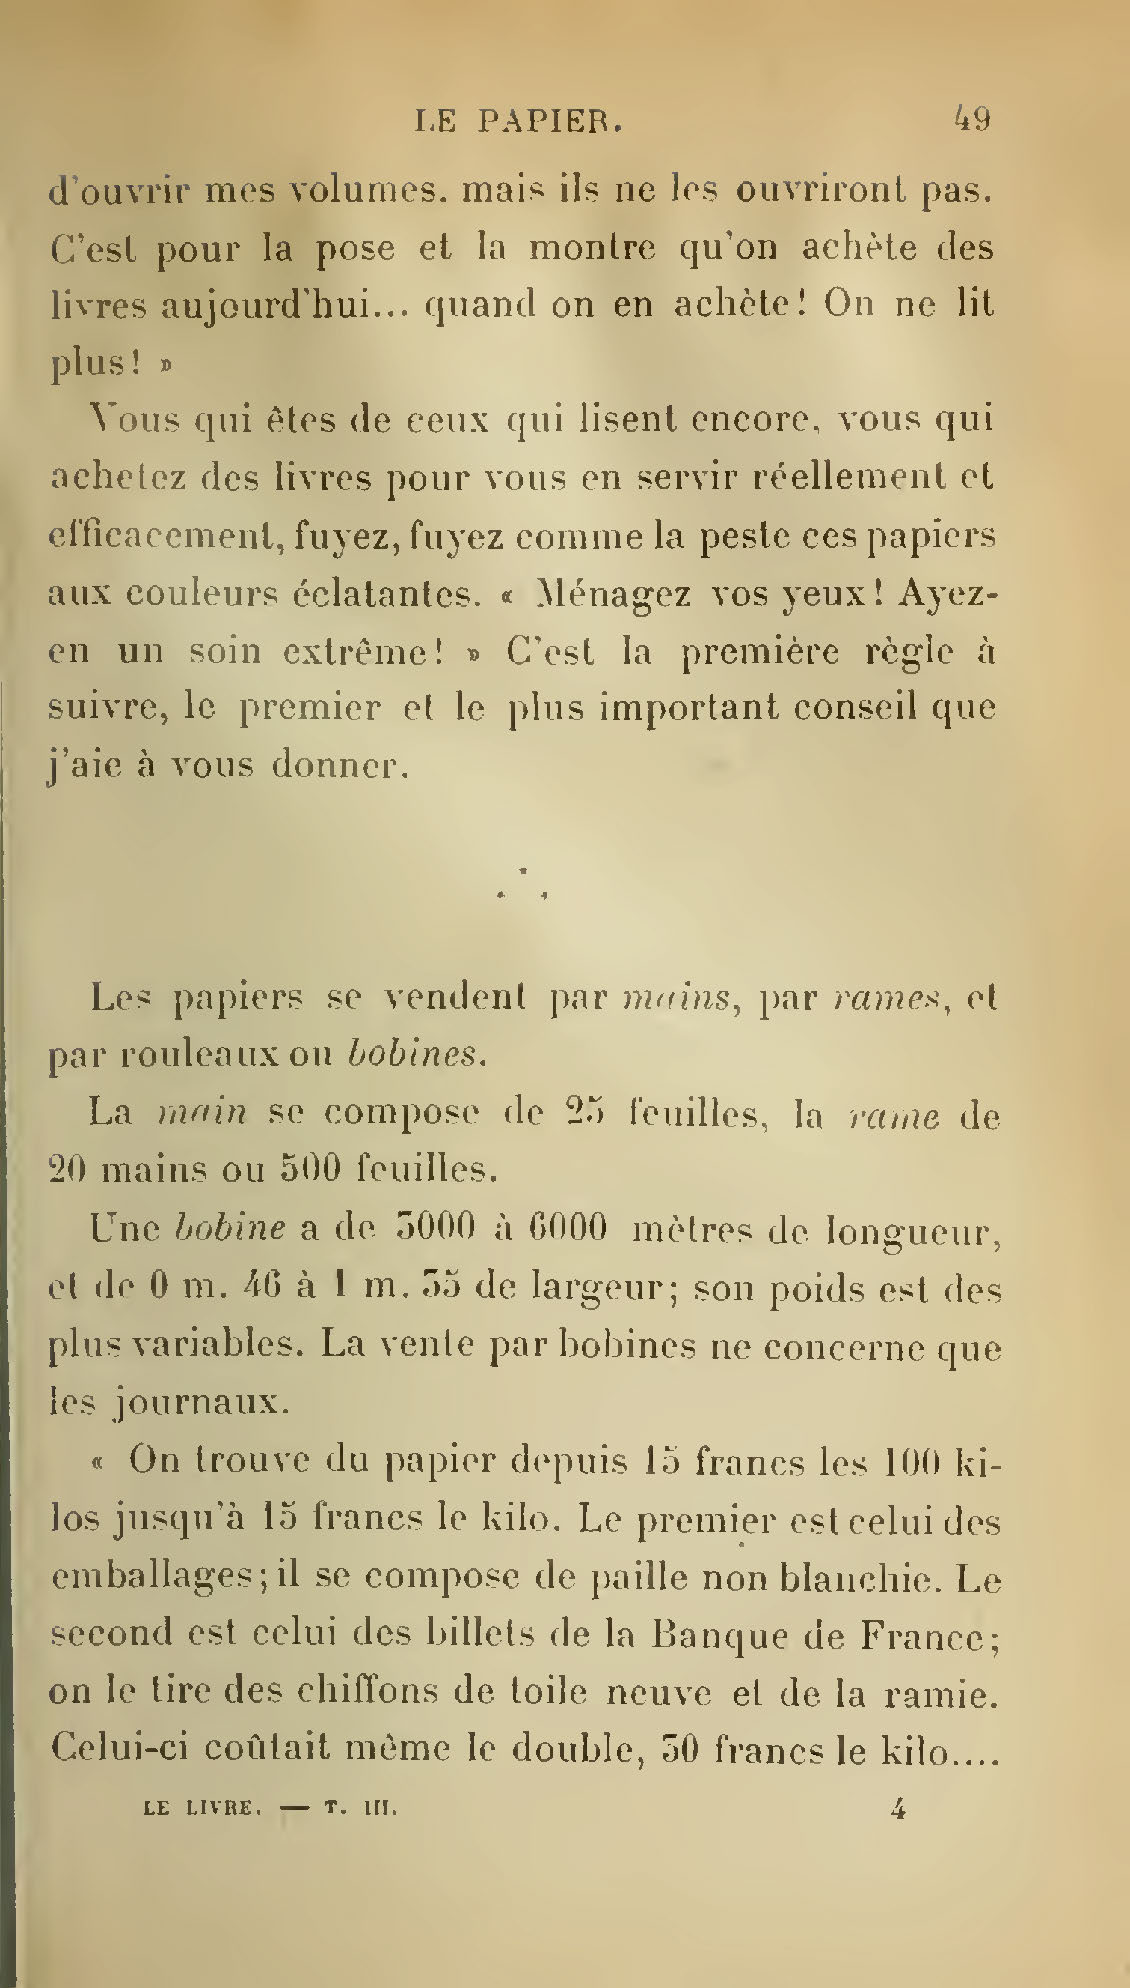 Albert Cim, Le Livre, t. III, p. 49.